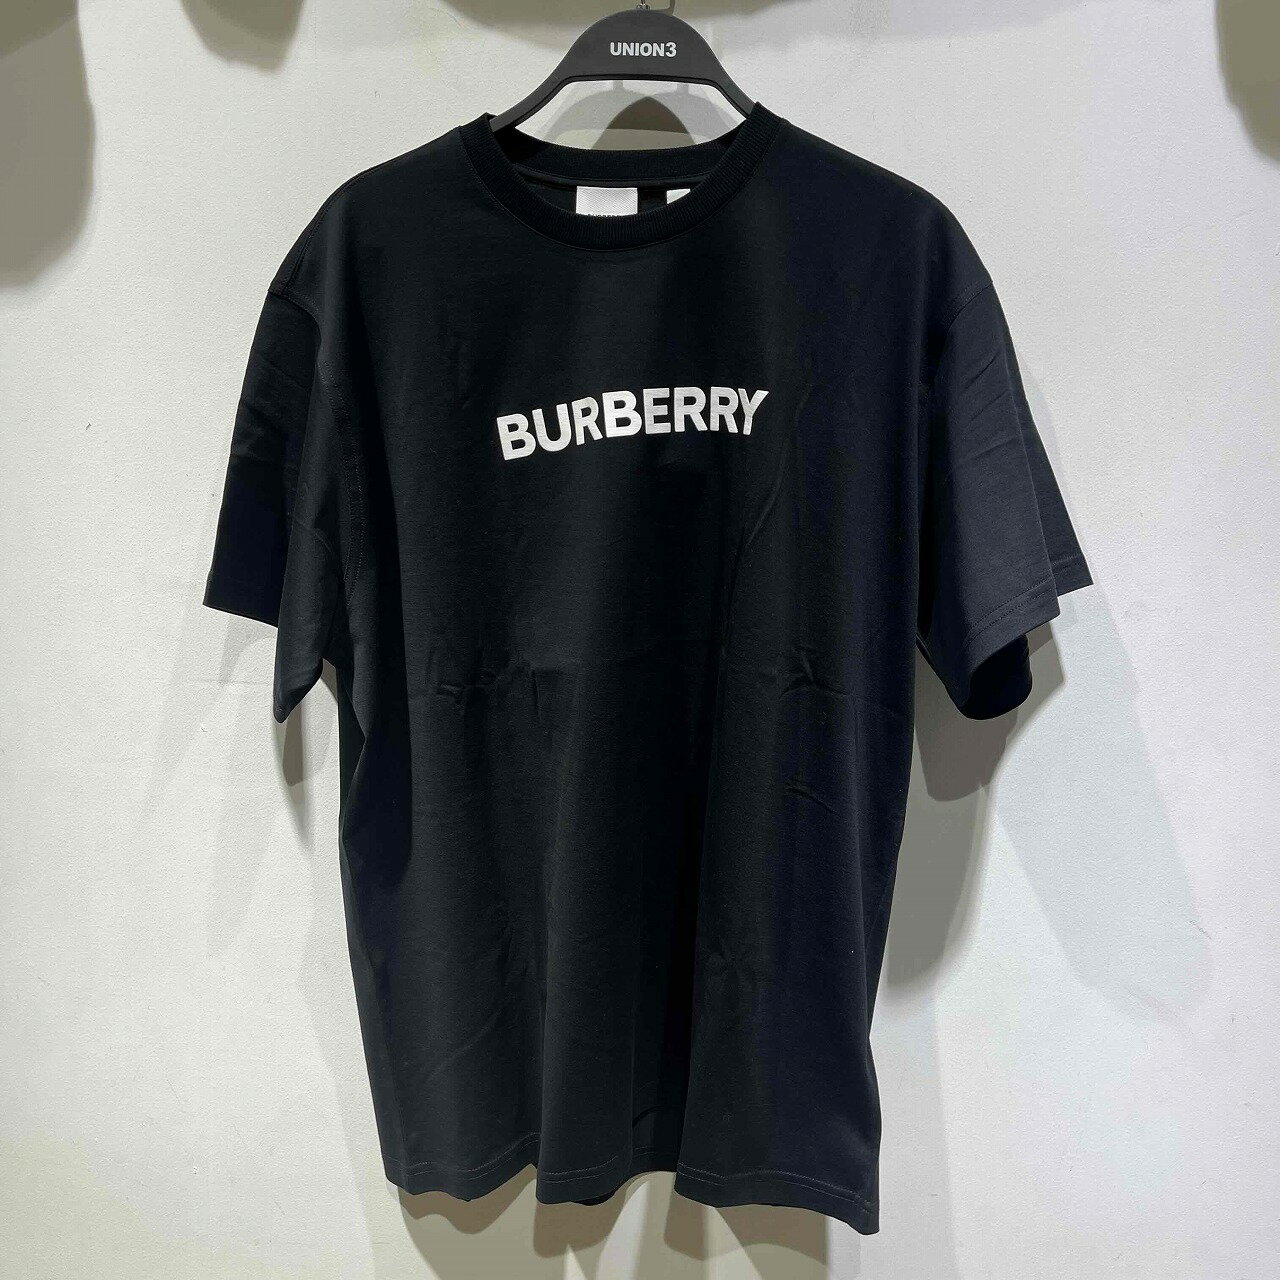 BURBERRY LOGO COTTON T-SHIRT 8084233 Mサイズ バーバリーロゴ コットン半袖Tシャツ ブラック 心斎橋店